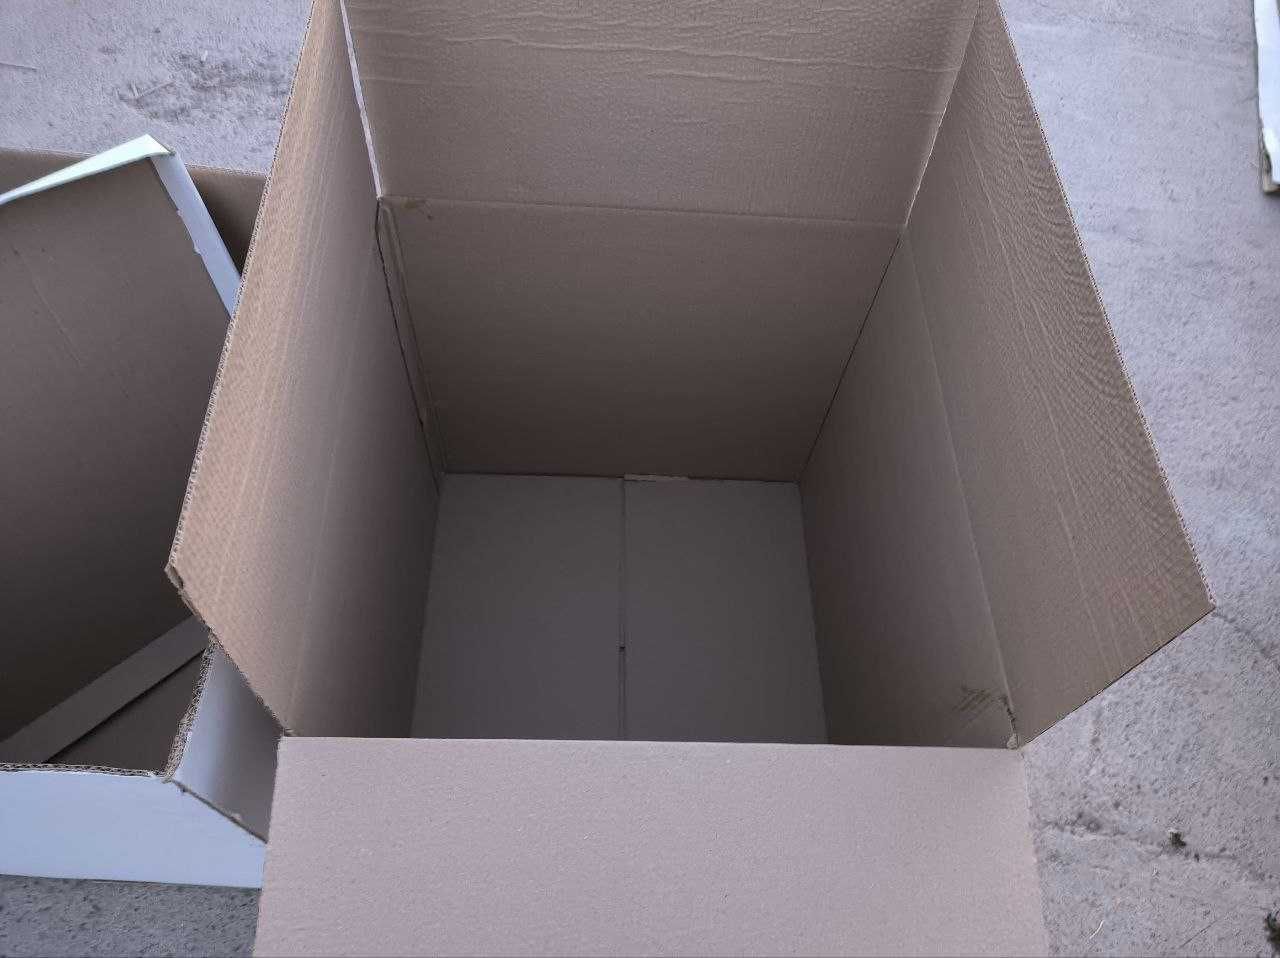 большая подарочная коробка 65х65х60 5слой белая- sovg'a qutisi oq